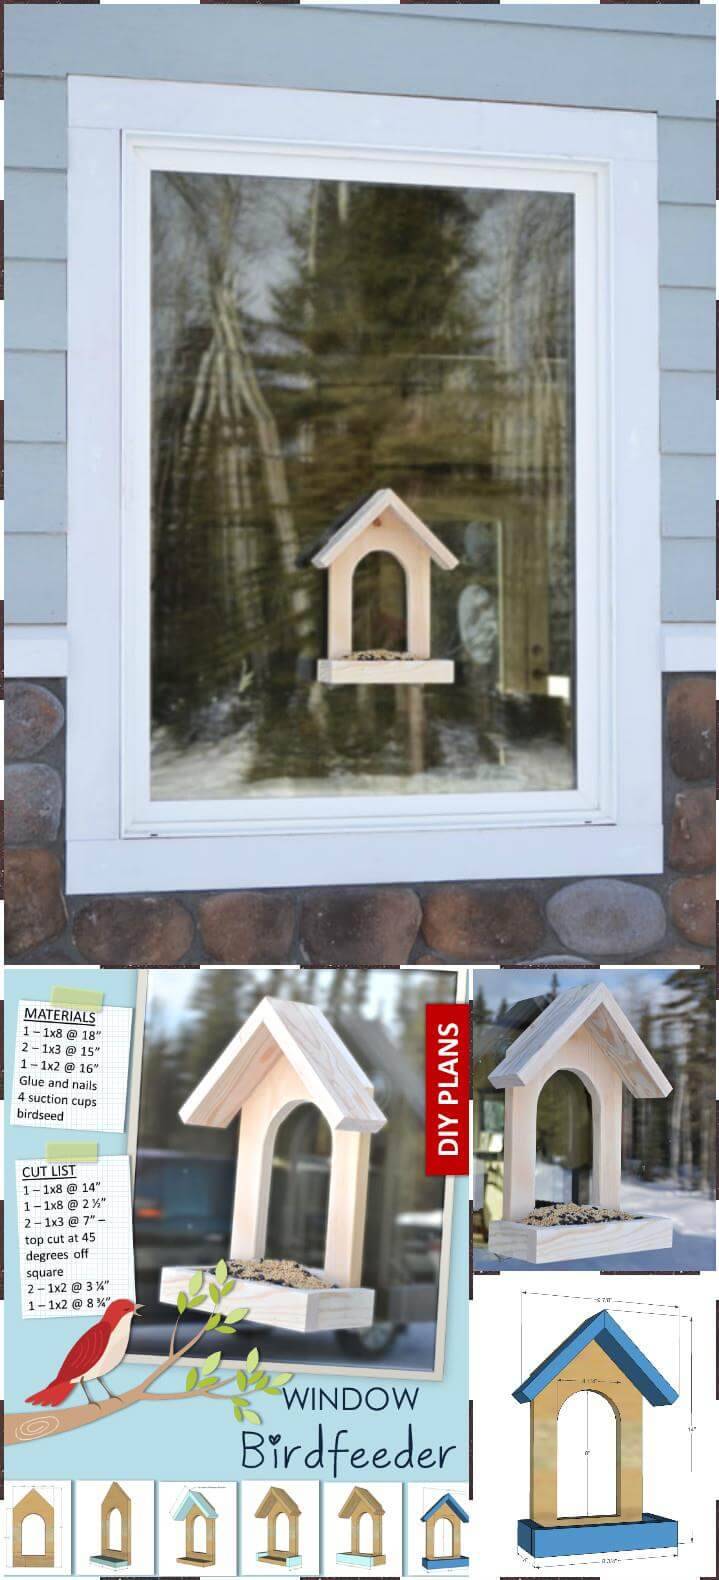 handcrafted wooden window bird feeder